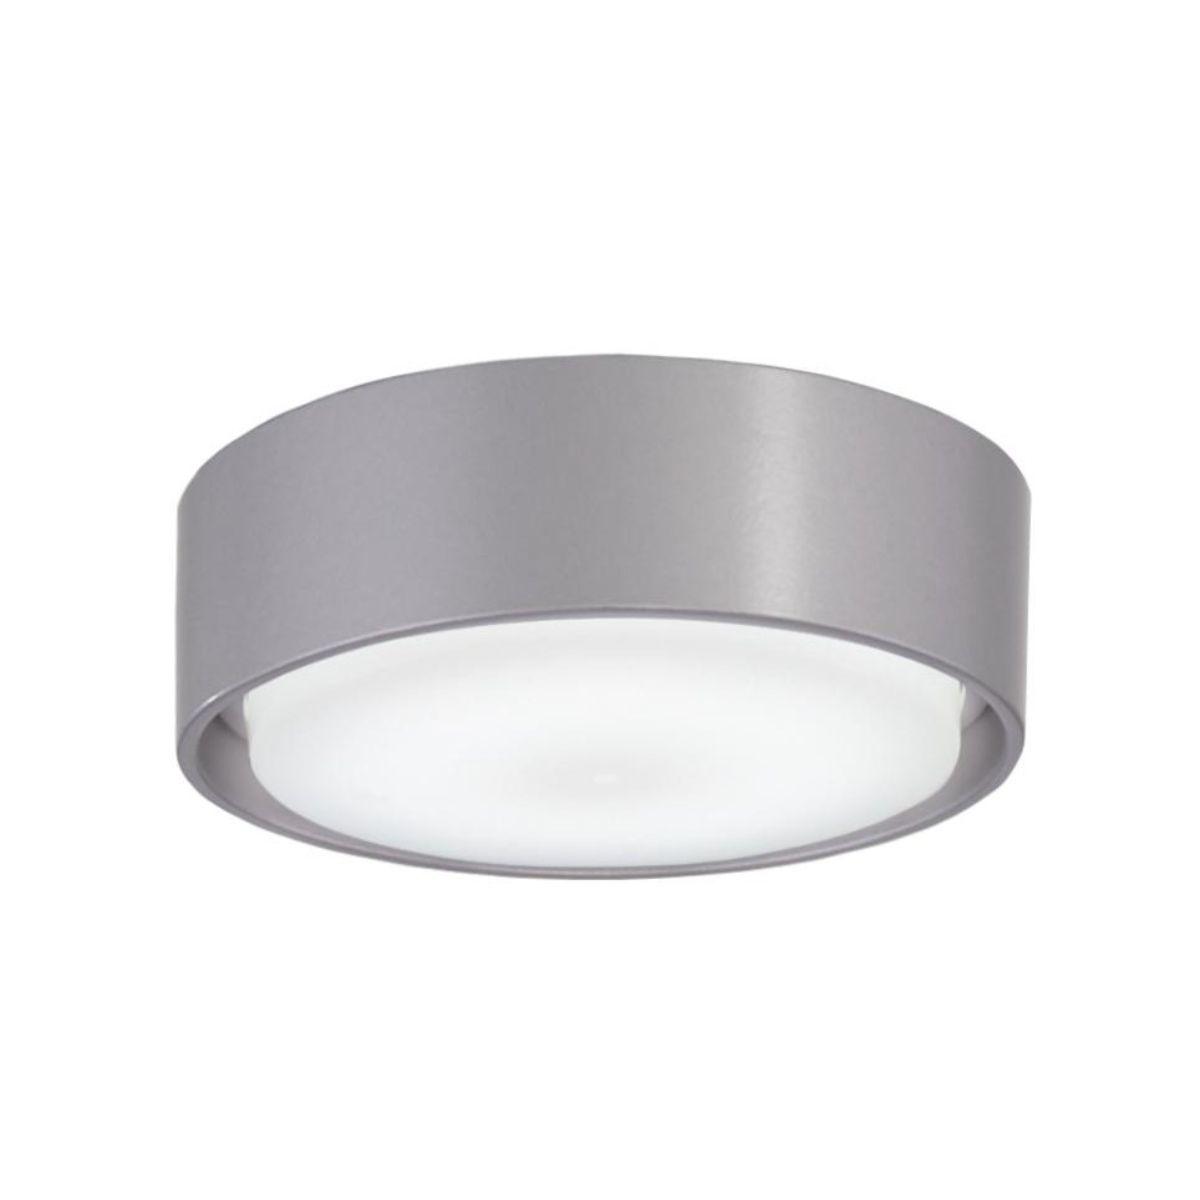 Simple LED Ceiling Fan Light Kit